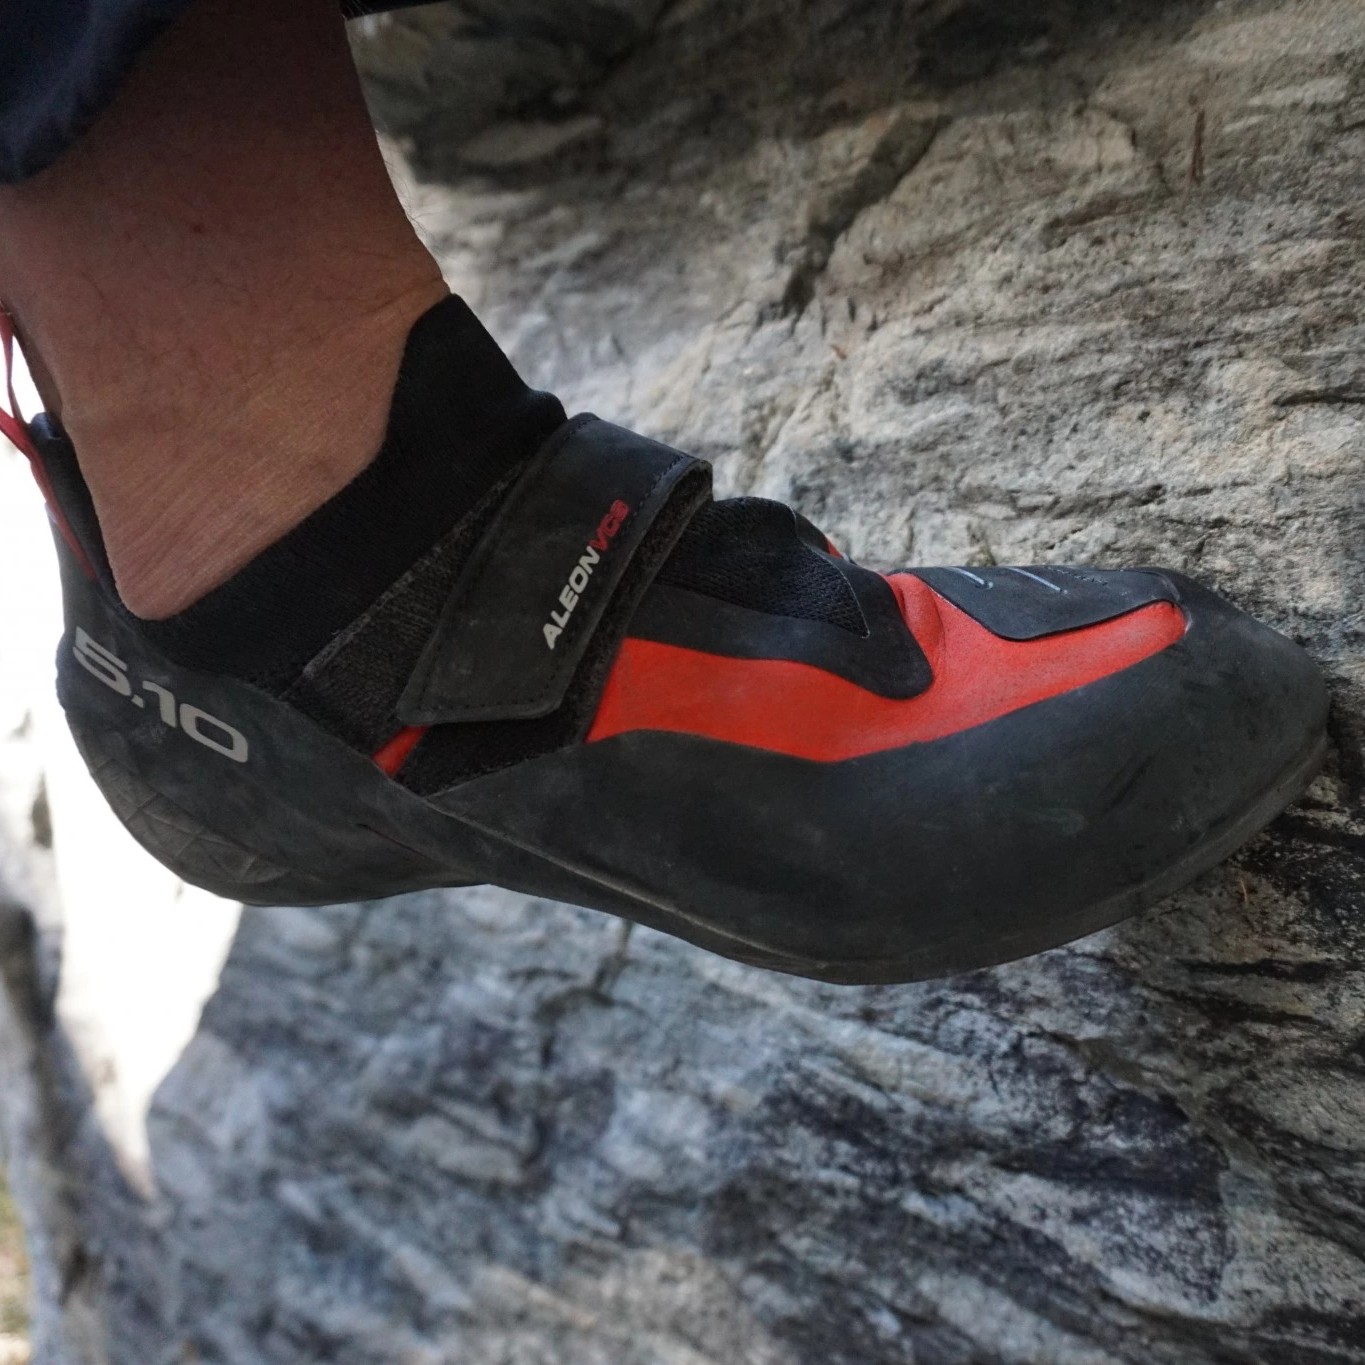 Adidas Five Ten Aleon Rock Climbing Shoe